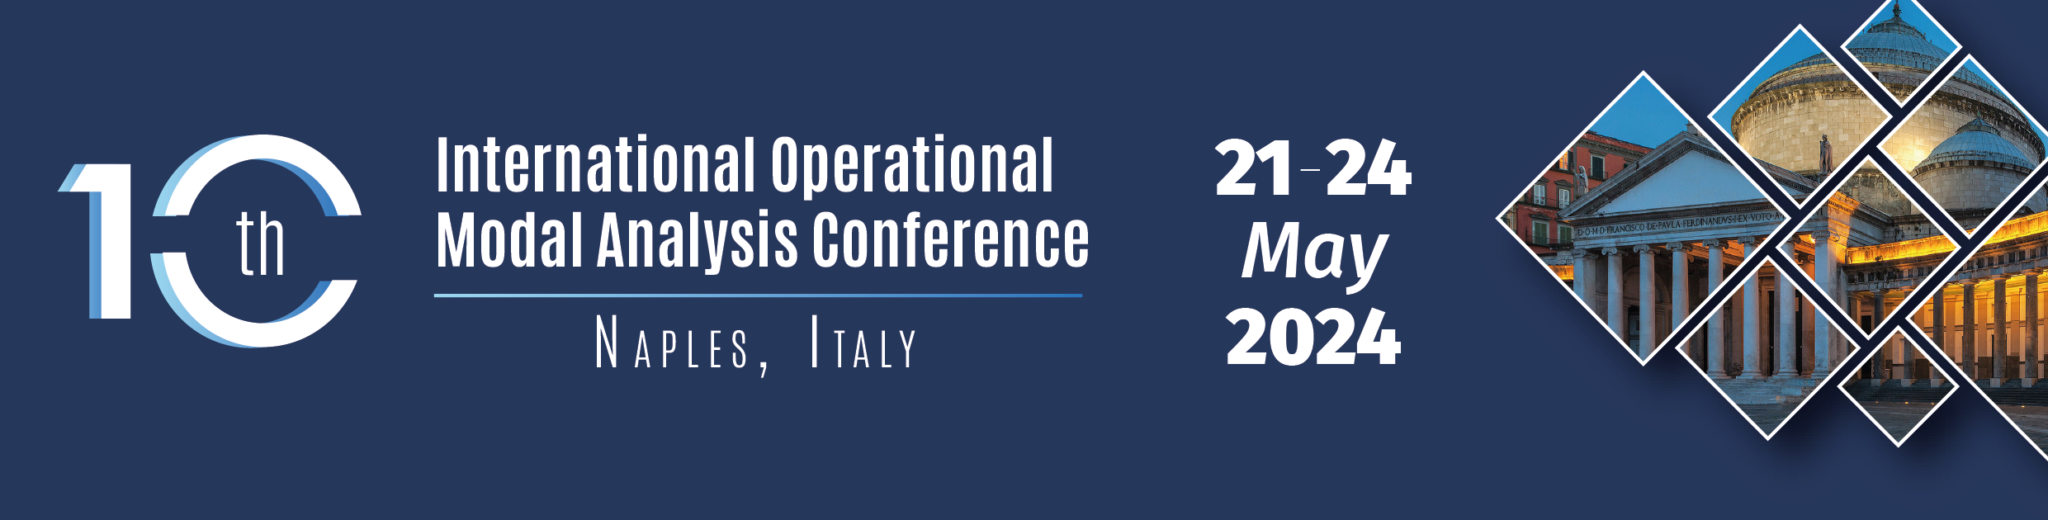 10th International Operational Modal Analysis Conference IOMAC 2024